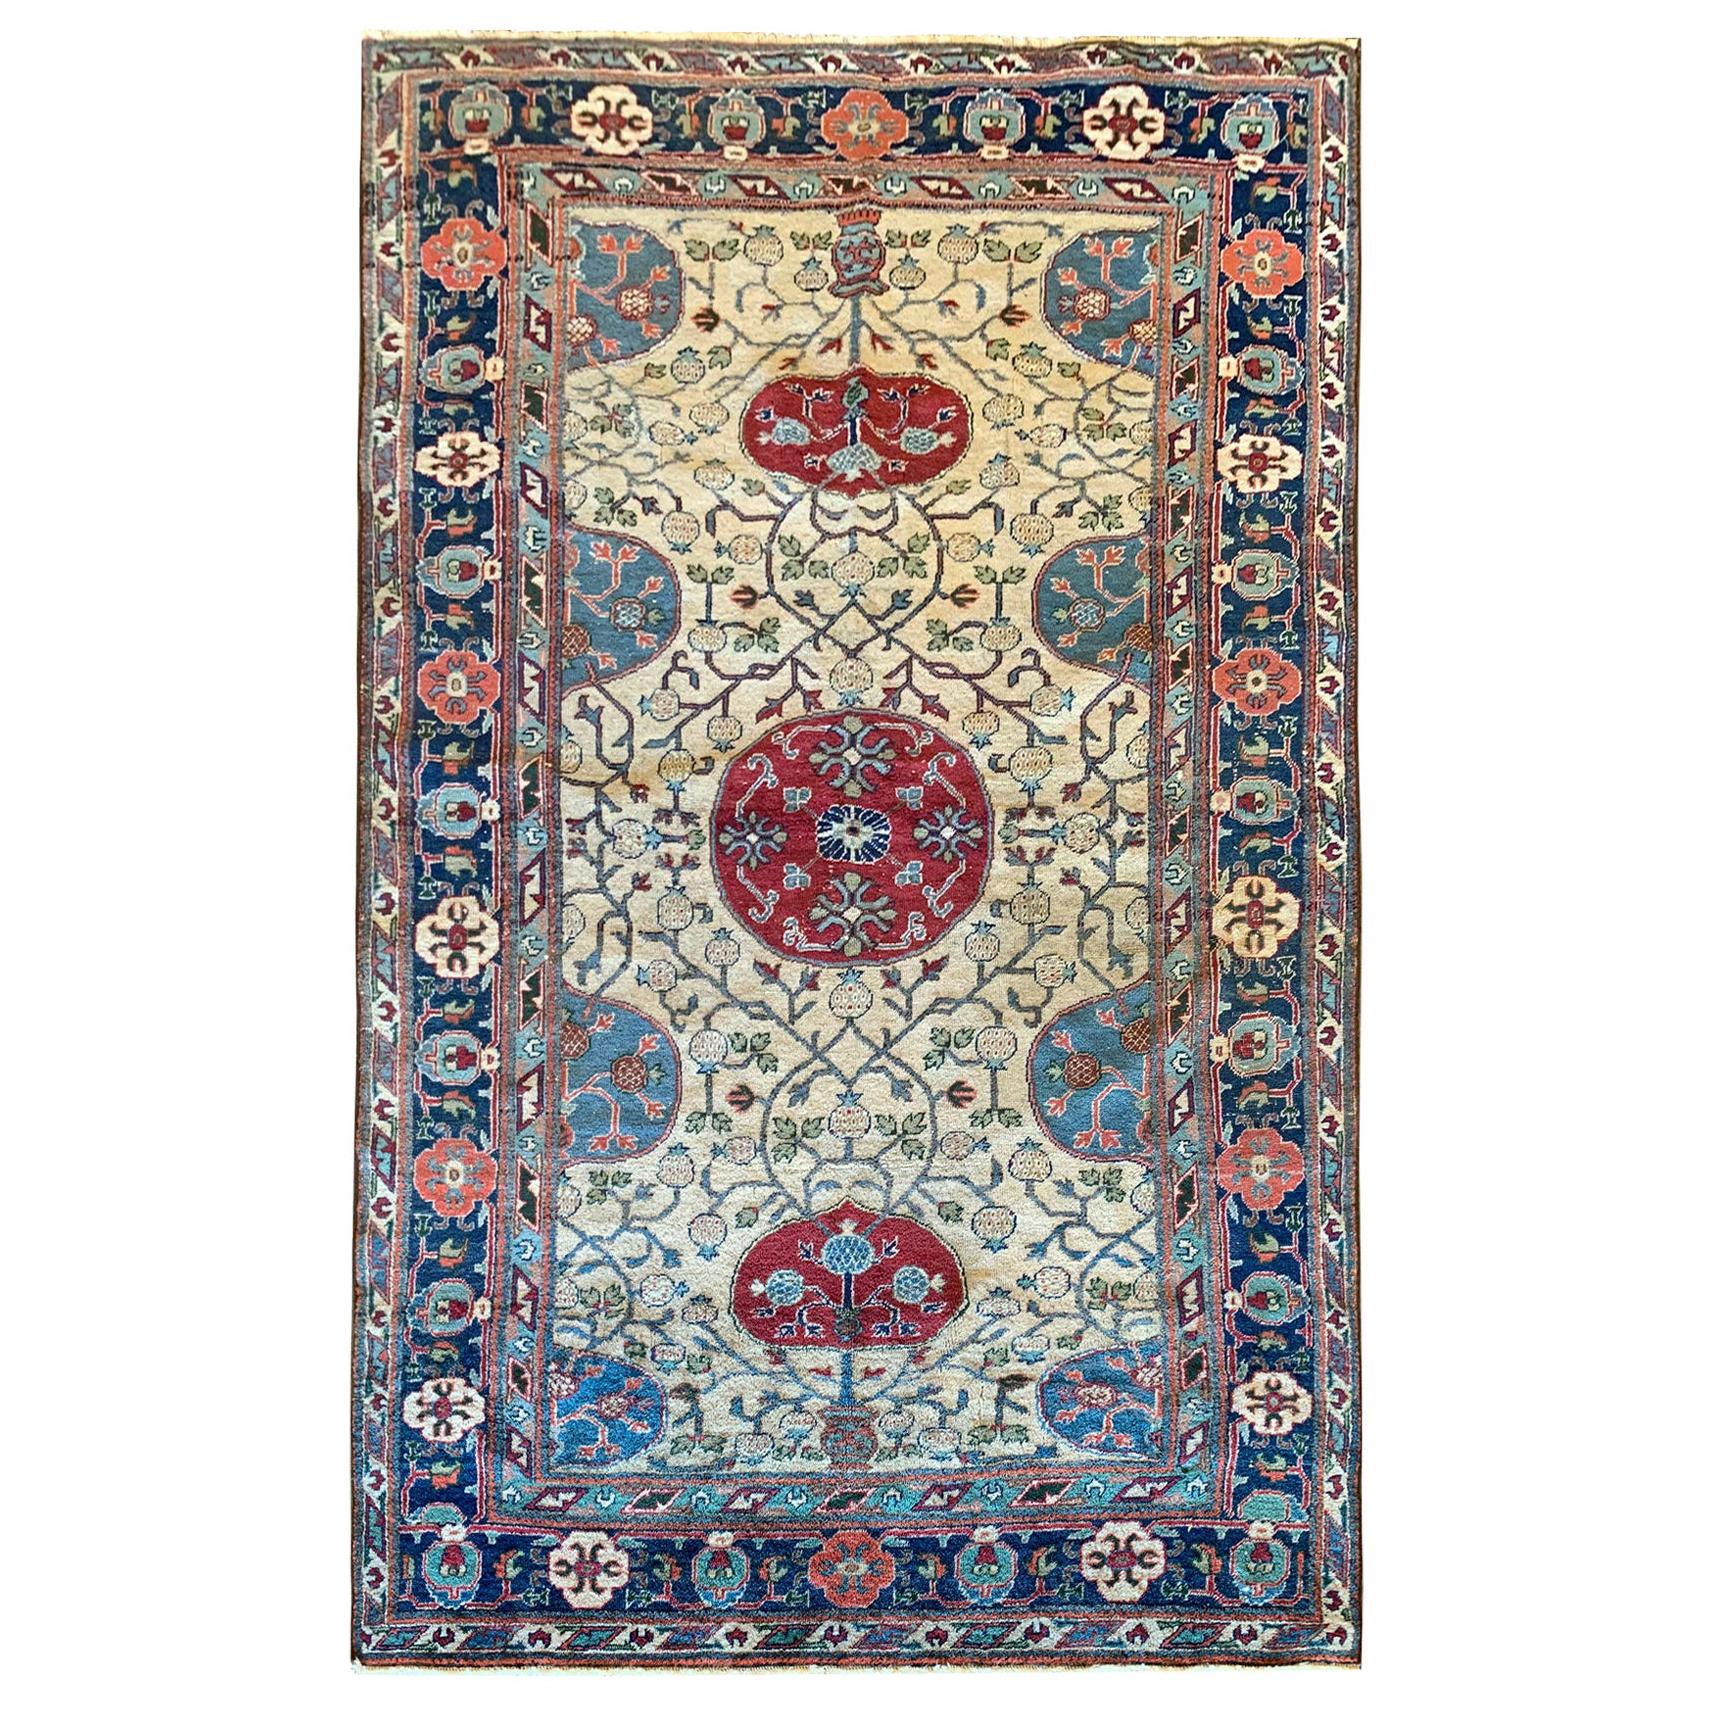 Antique Rugs Central Asian Khotan Carpet Handmade Oriental Area Rug